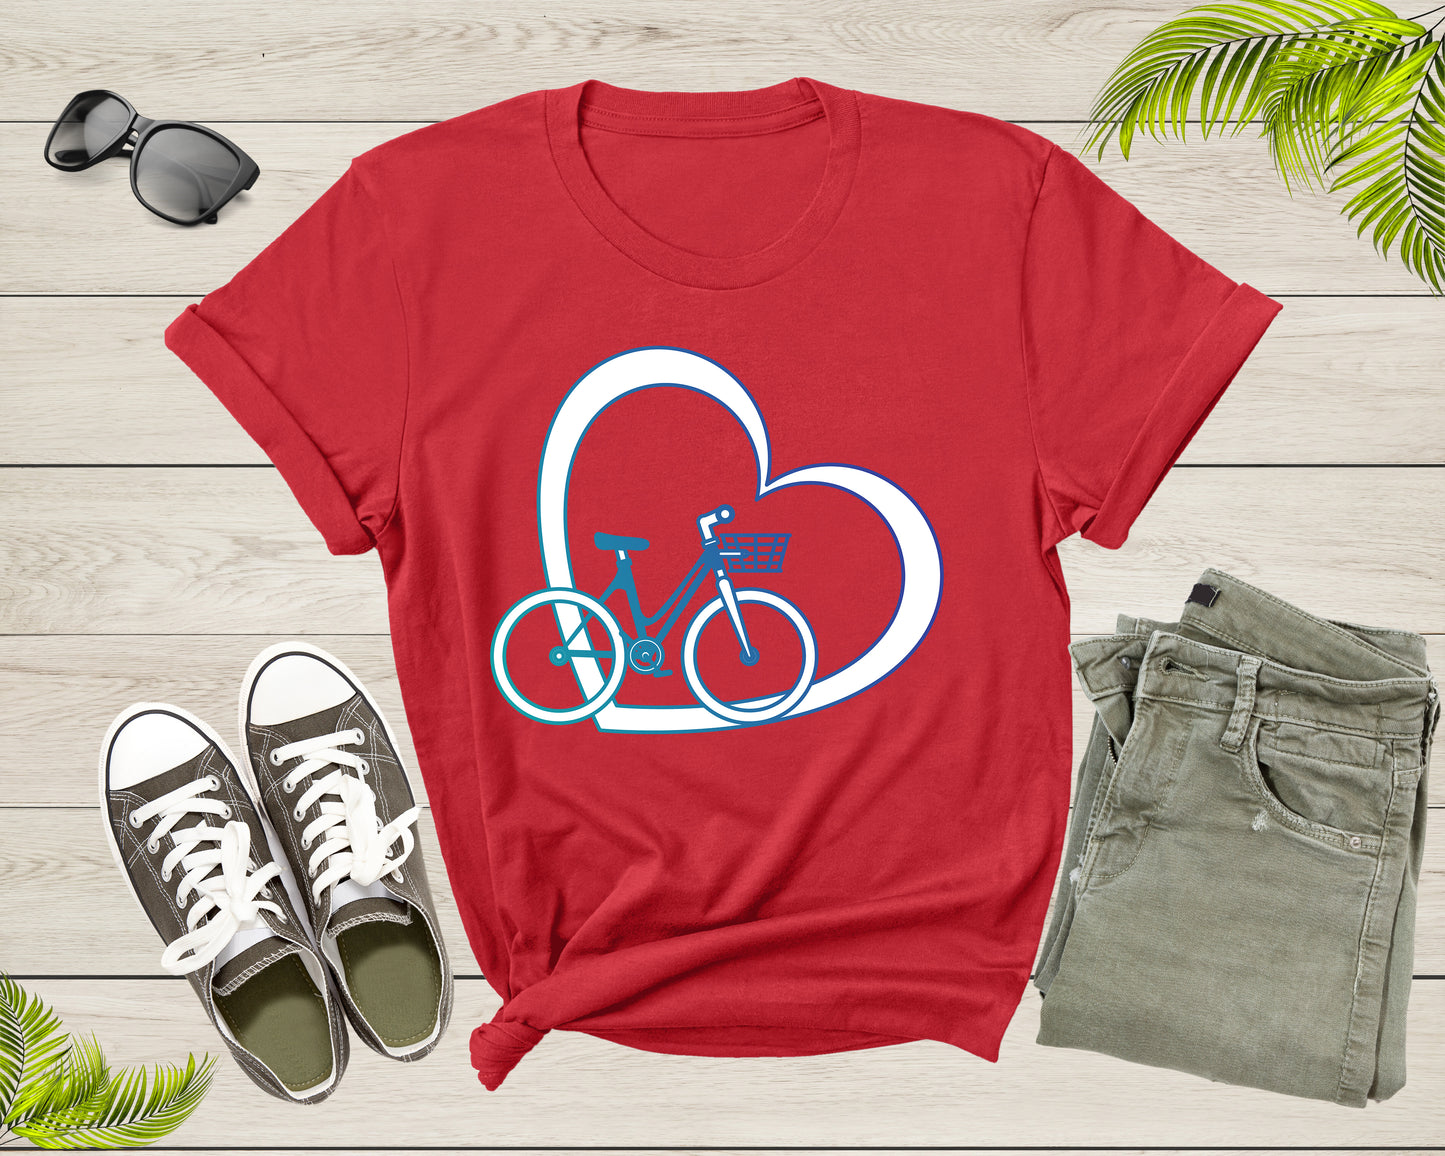 Funny Bicycle Lover Gift Idea Shirt Women Men Kids Boys Girls Bicycle Themed Tshirt Design Bike Lover Birthday Present Dad Mom T-shirt